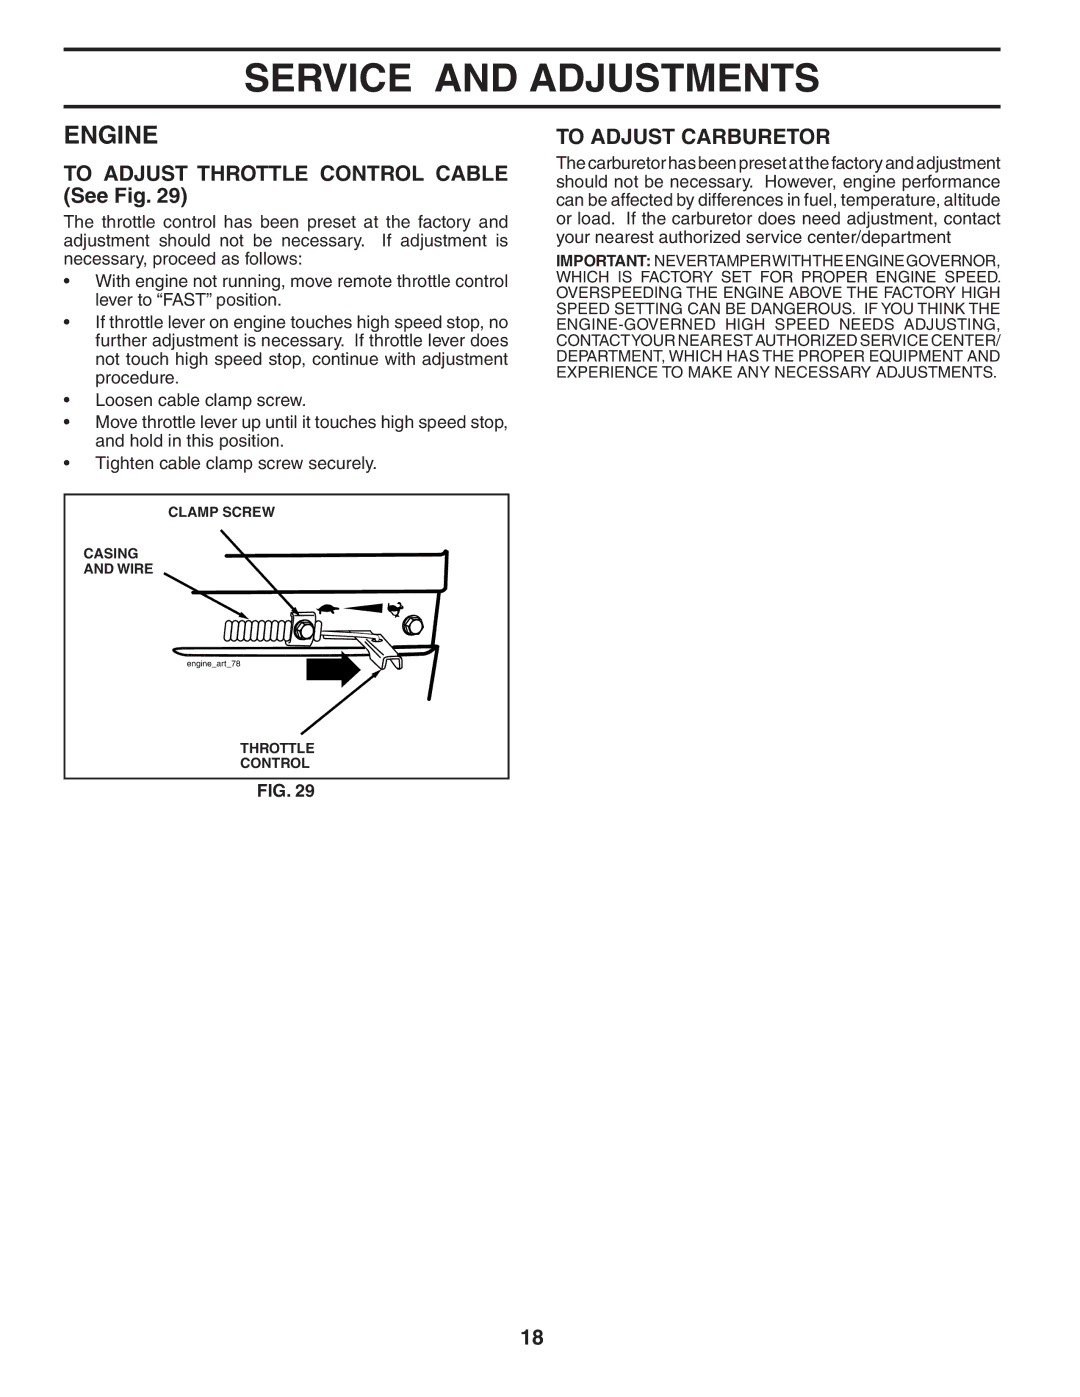 Maxim MXR500 owner manual To Adjust Throttle Control Cable See Fig, To Adjust Carburetor 